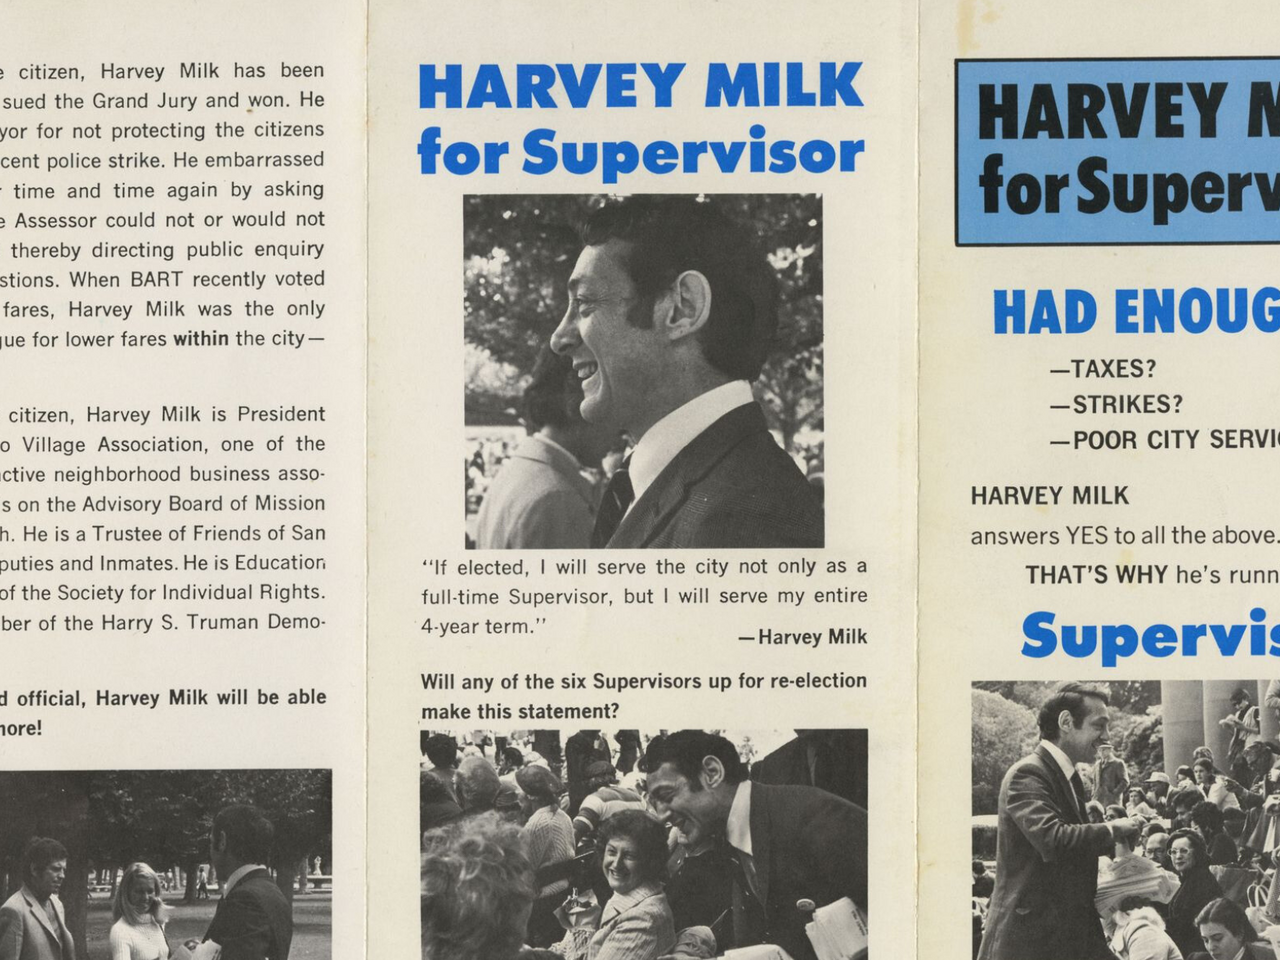 Handout for Harvey Milk's campaign for supervisor